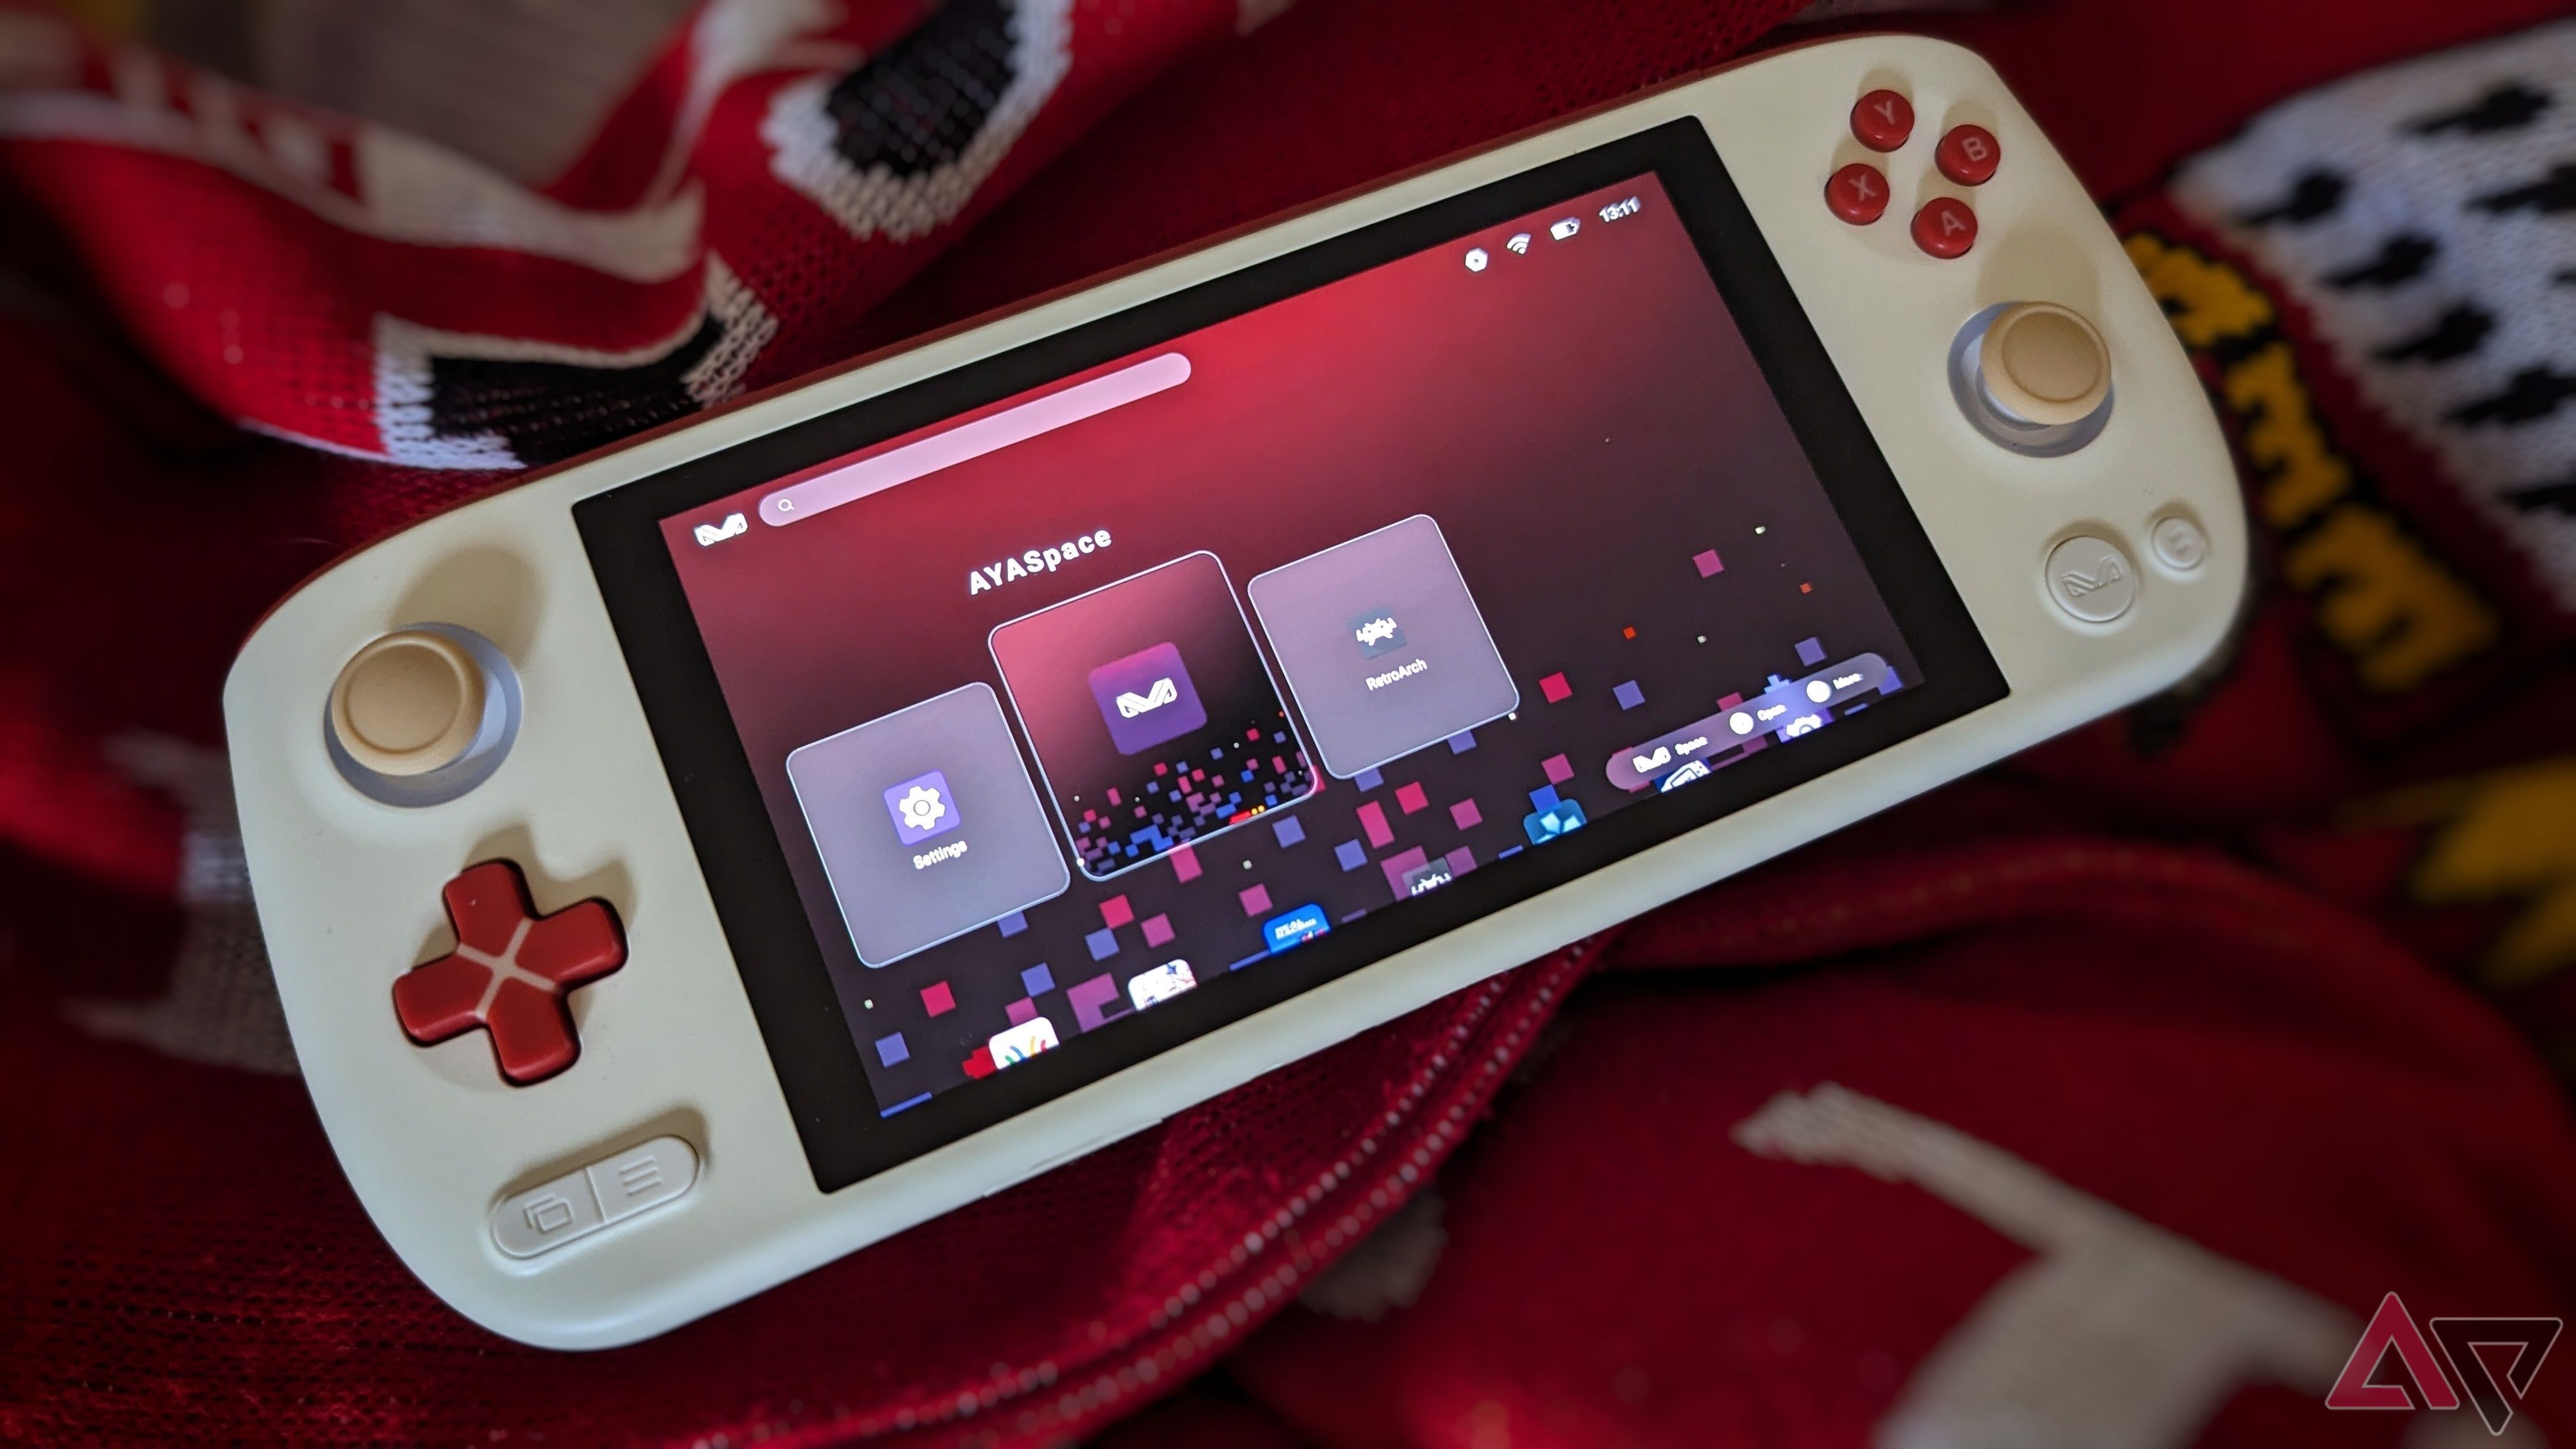 Ayaneo Pocket Air review: The pinnacle of handheld emulation